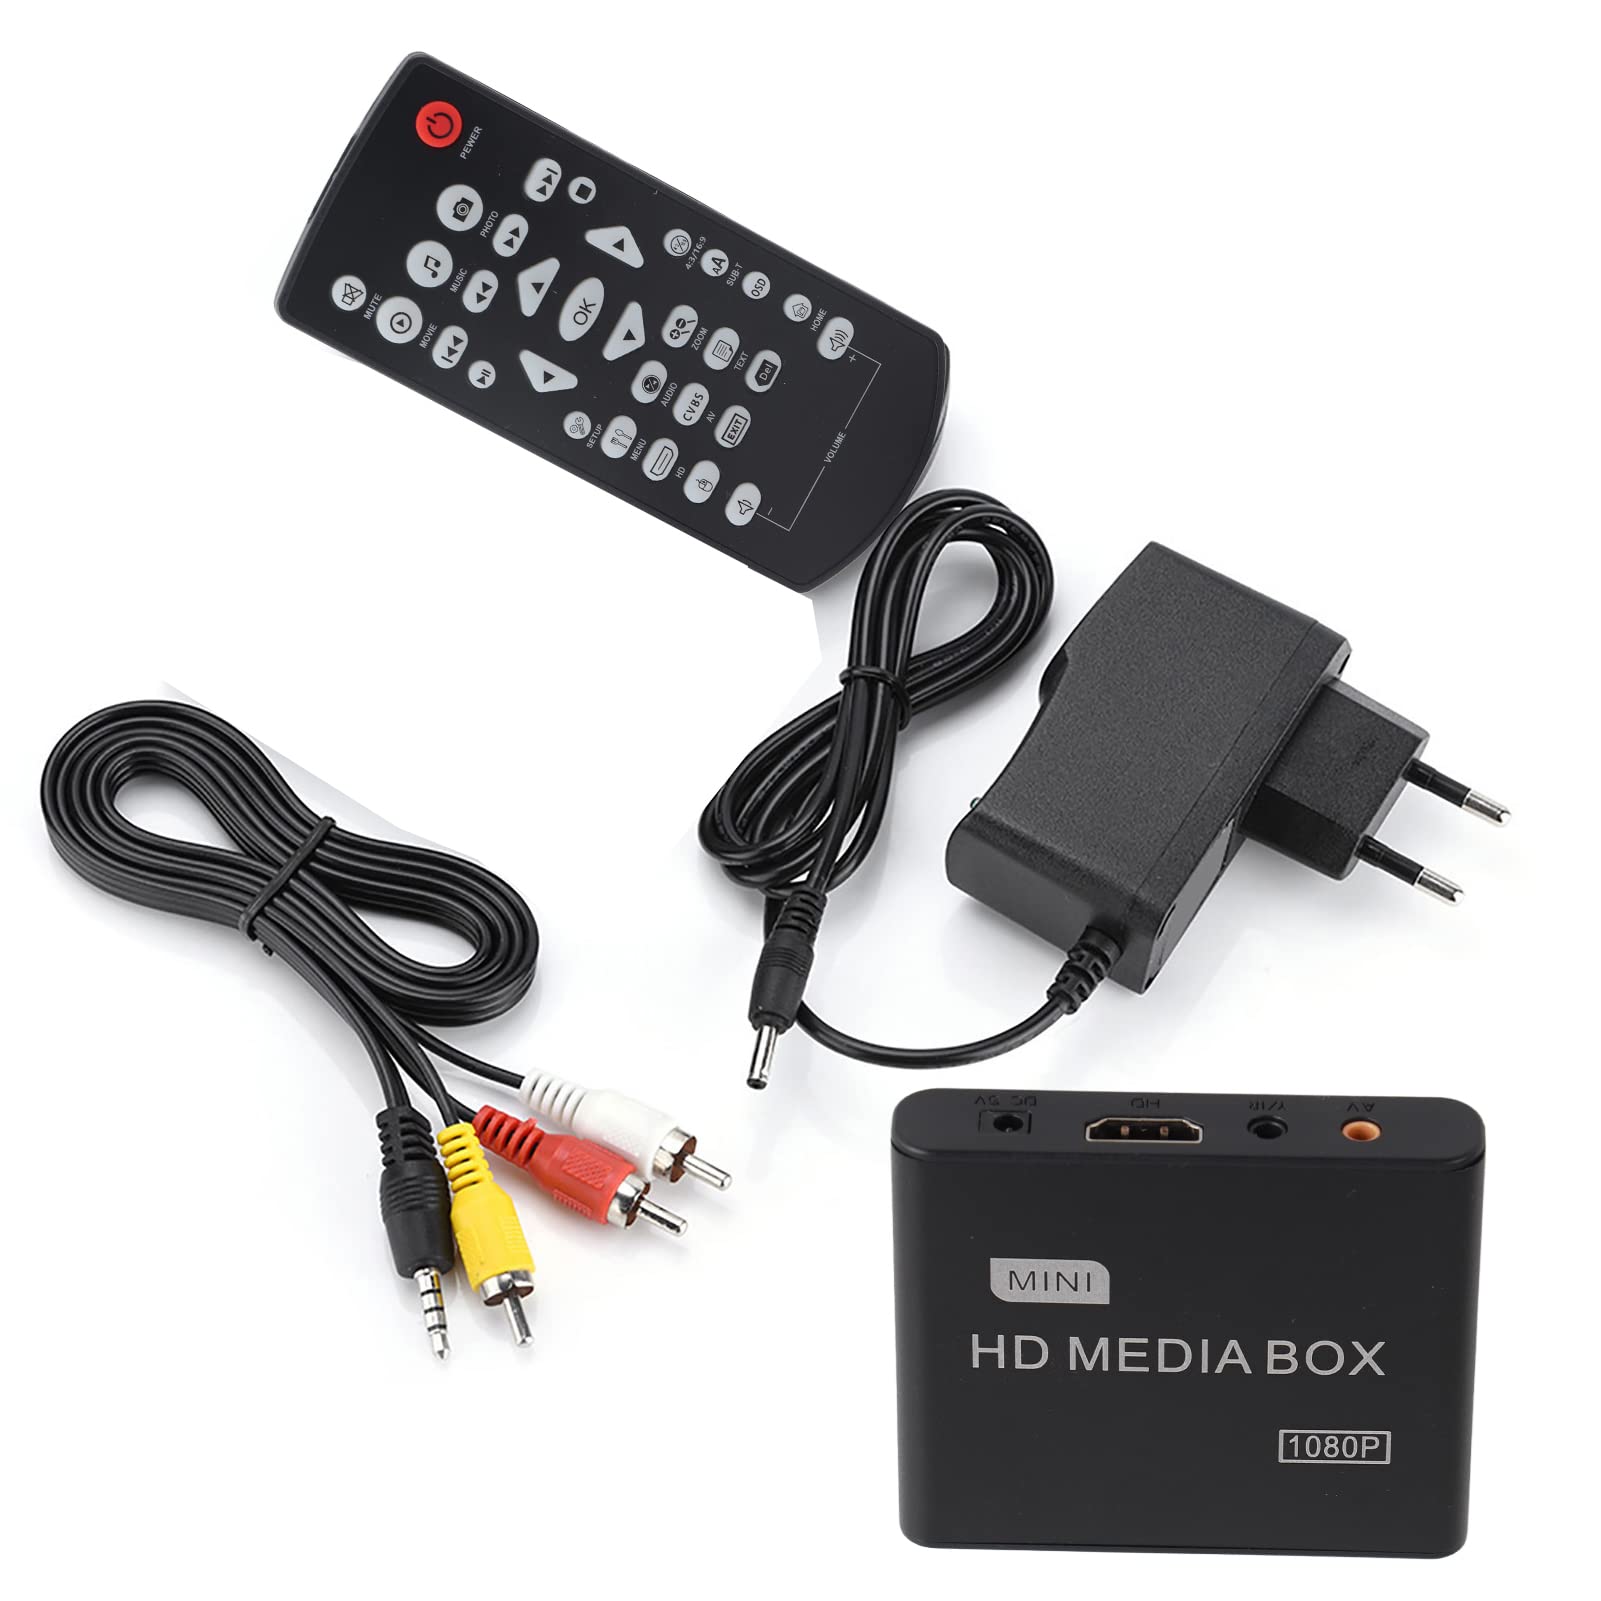 Sutinna Full HD Media Player, Ultra HD 1080P Videofilm HDMI Multimedia Player Box Tragbarer digitaler Media Player Unterstützung USB MMC RMVB MP3 AVI MKV(Mich)